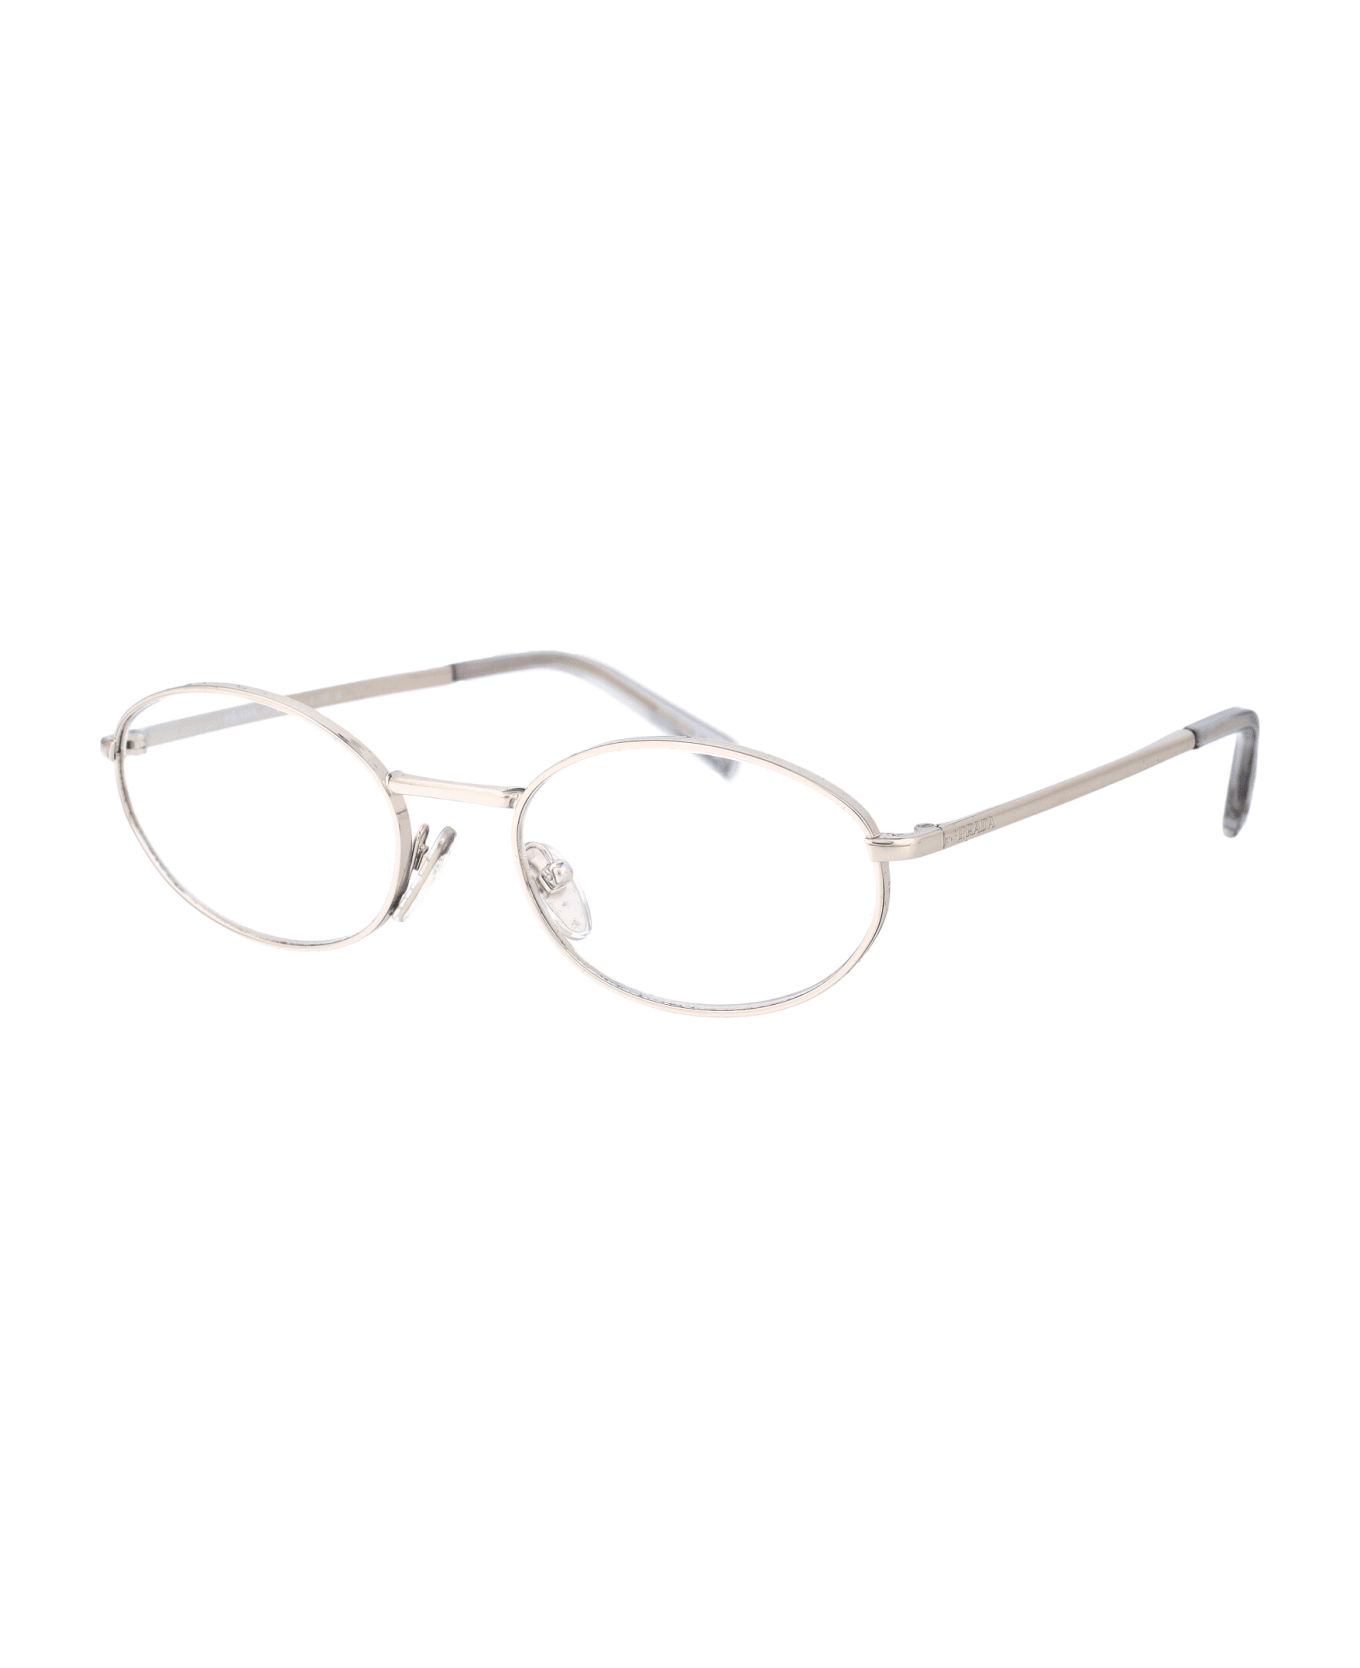 Prada Eyewear 0pr A57v Glasses - 1BC1O1 SILVER